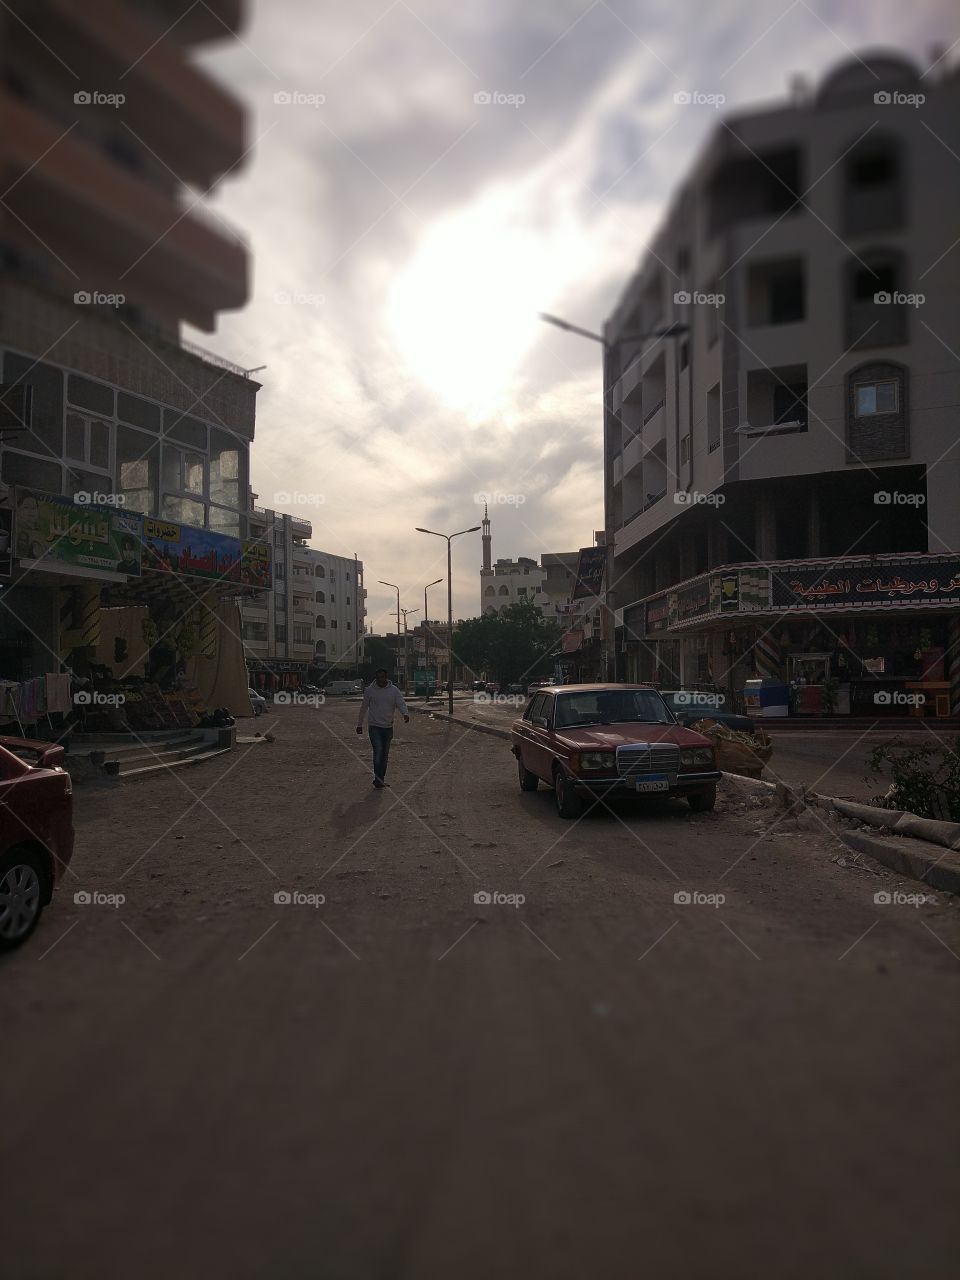 Street, Car, Road, City, Vehicle